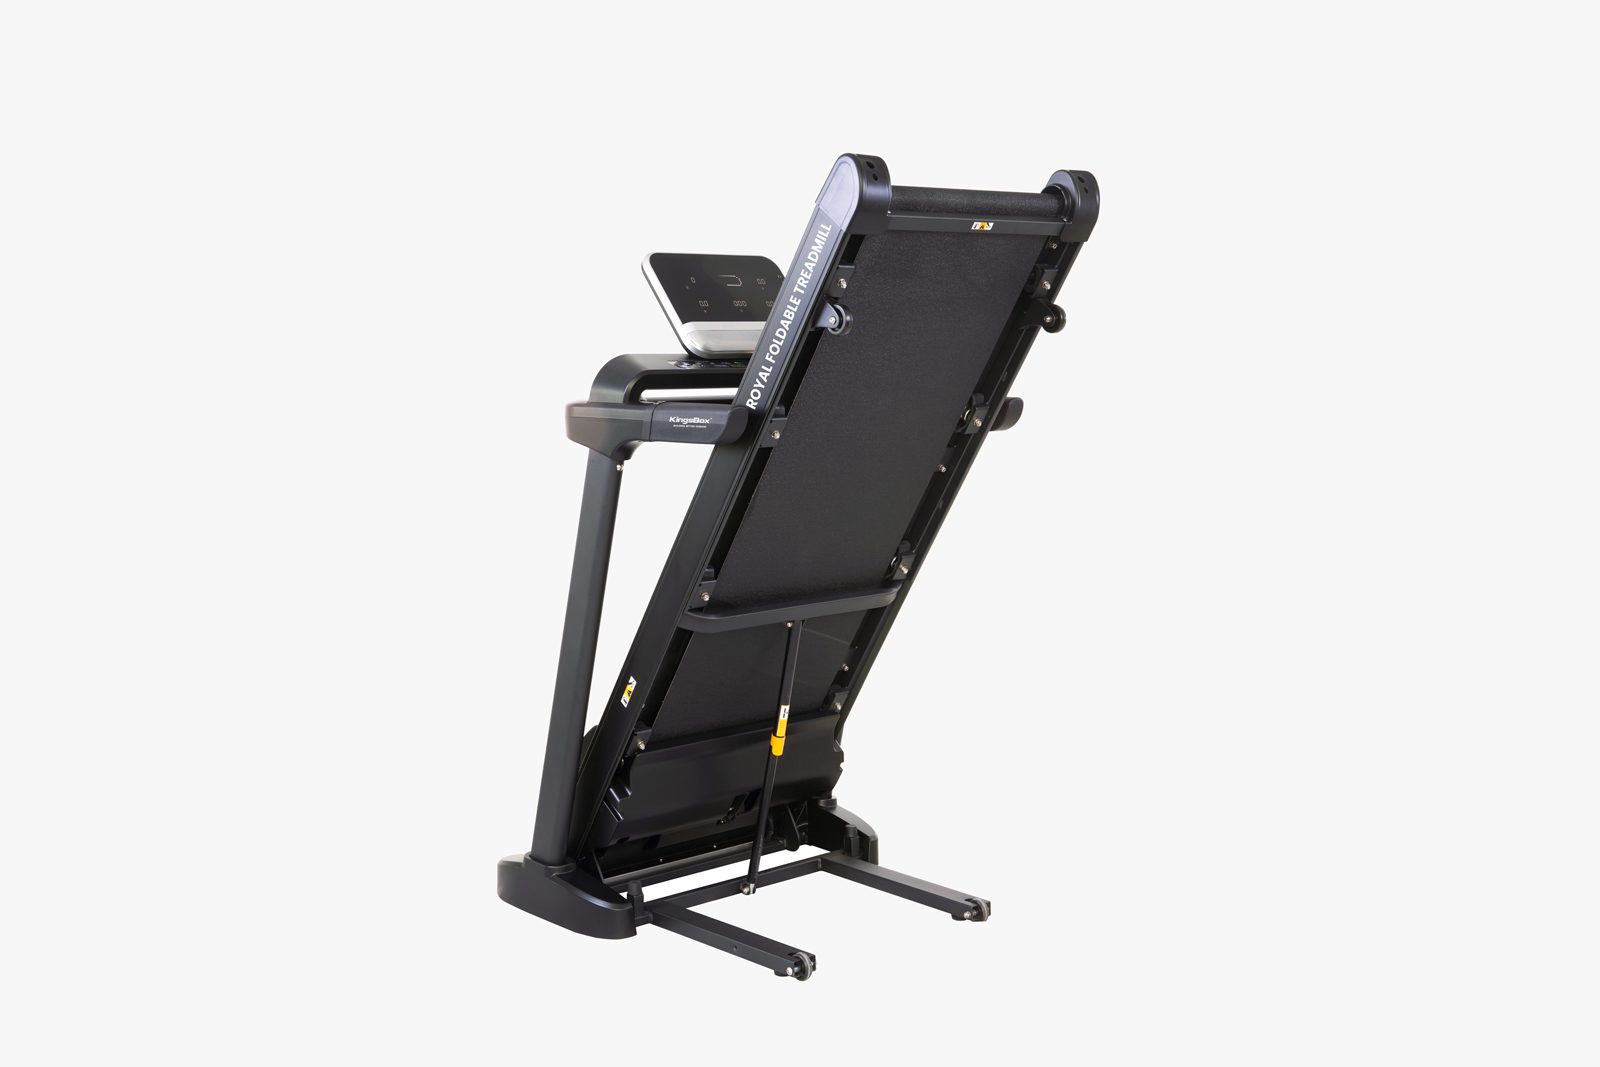 Gebraucht - Royal Foldable Treadmill | KingsBox